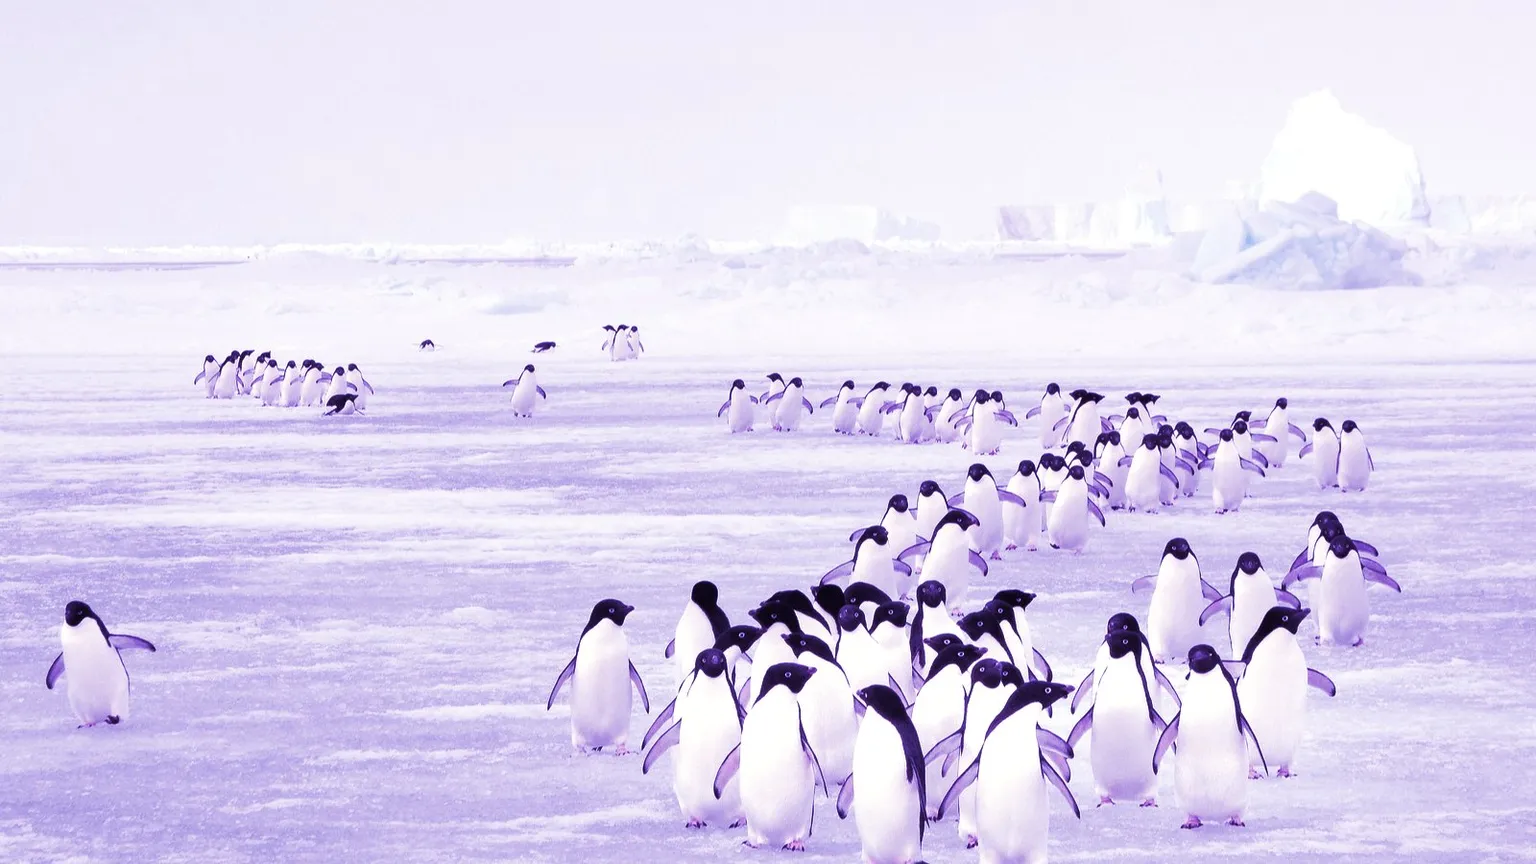 Penguin migration. Image: Shutterstock